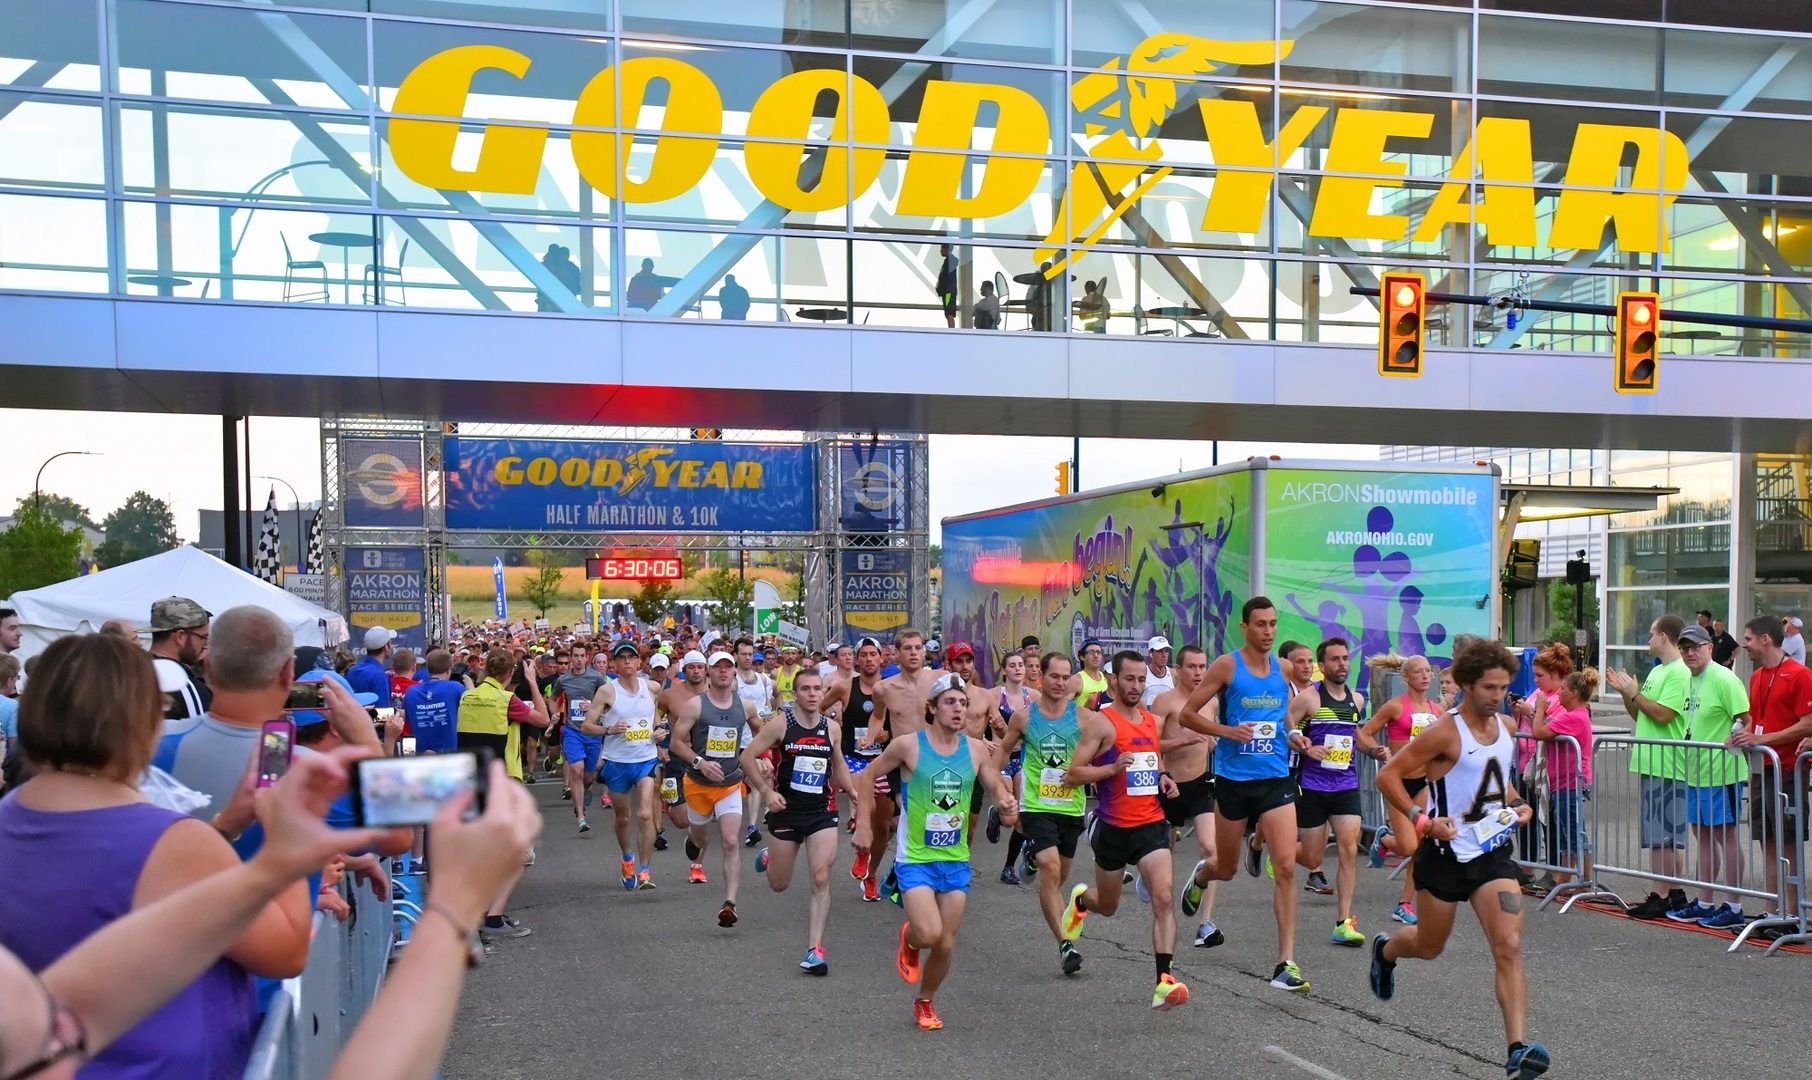 Goodyear Half Marathon & 10k, August 14, 2021 in Akron, Akron, Ohio, United States